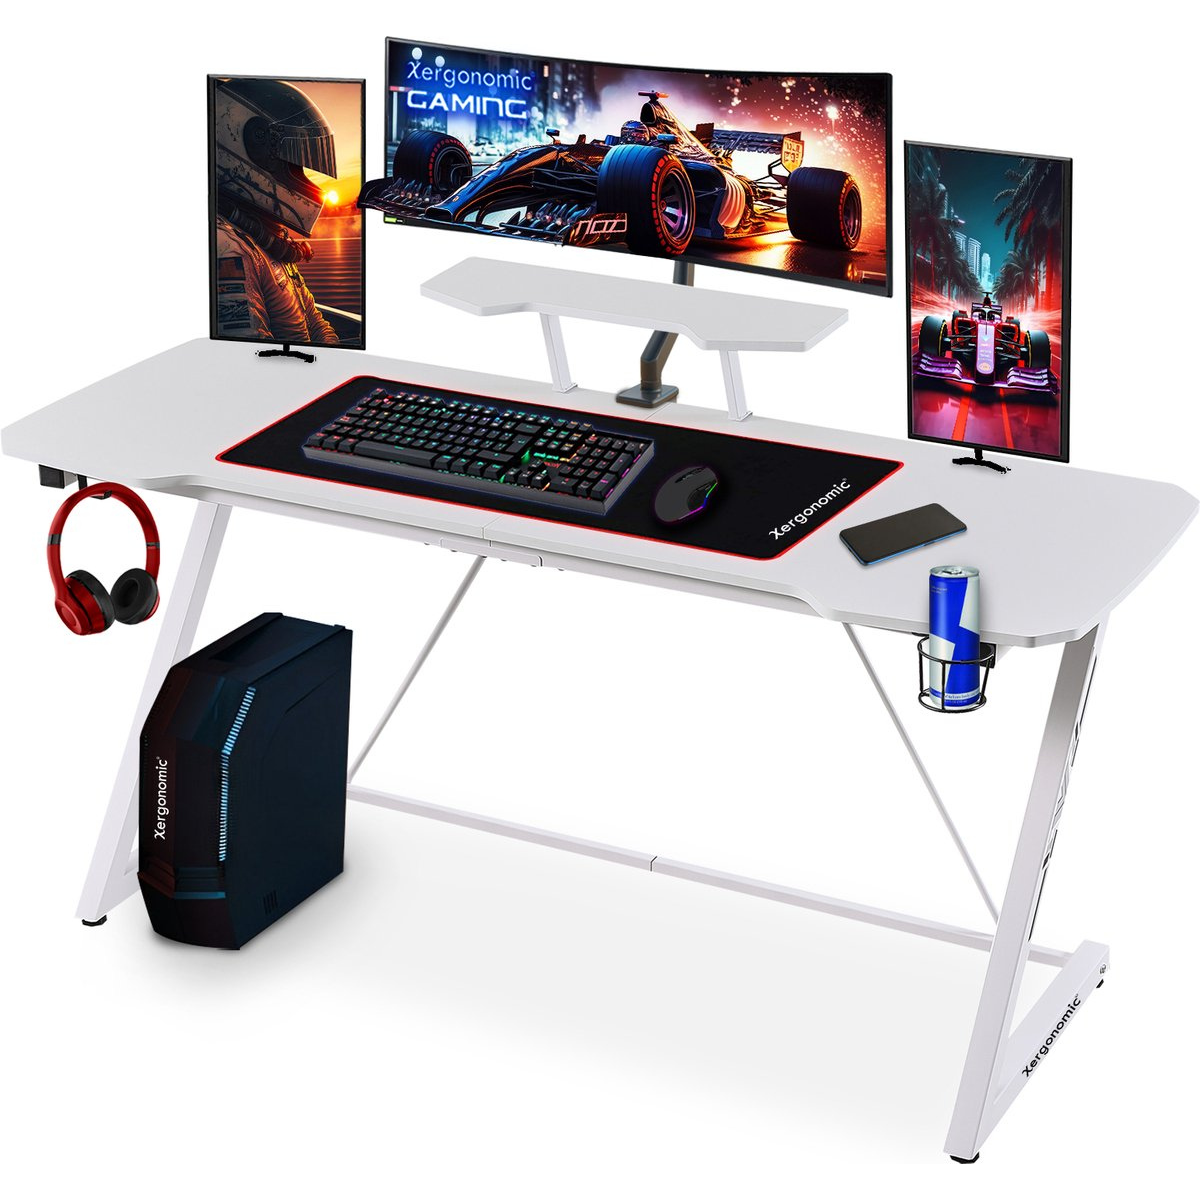 Xergonomic Morpheus Subzero Gaming desk - Game Desk - Headphone holder, cup holder & monitor stand - Carbon Fiber Coated Top Layer - D58xW160xH74.5-92 cm - White